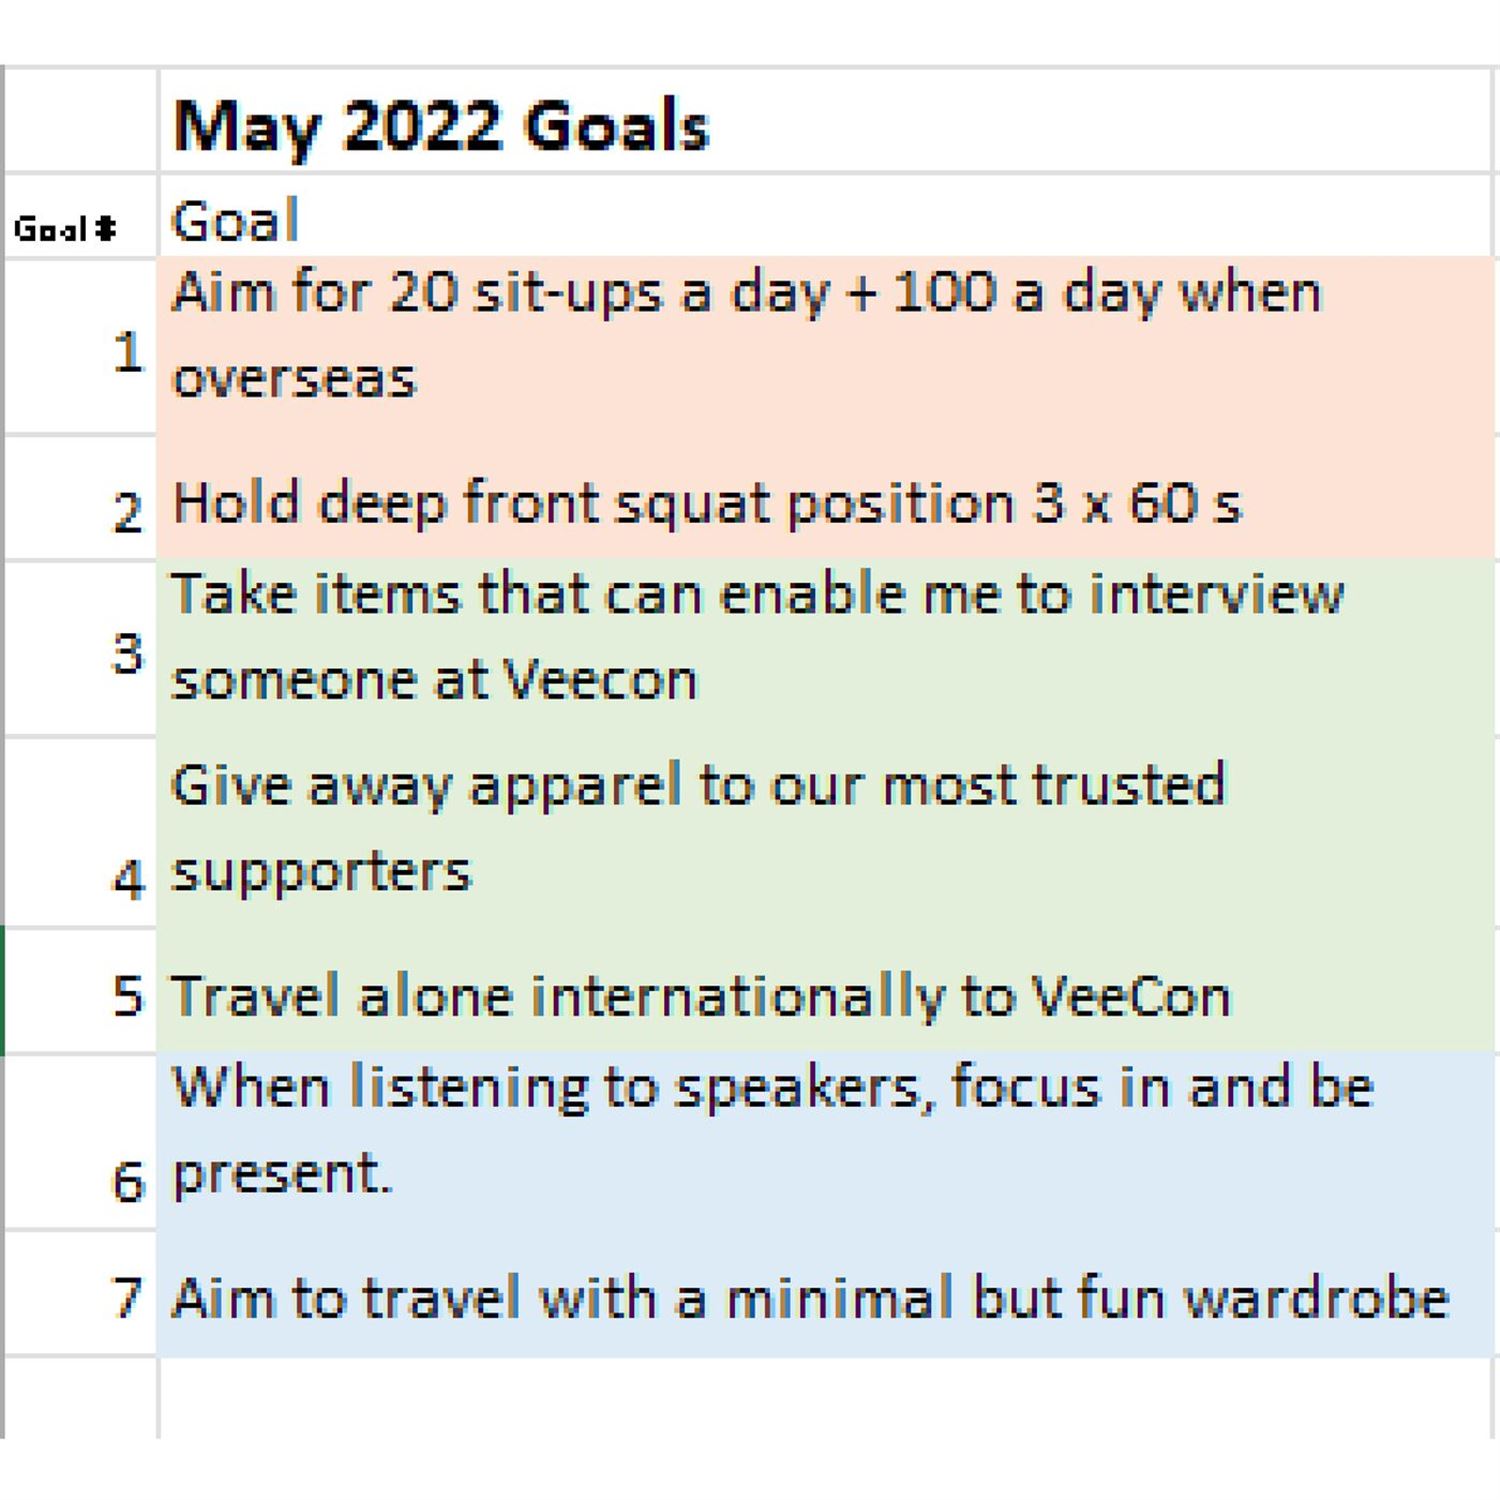 Juan's May Goals